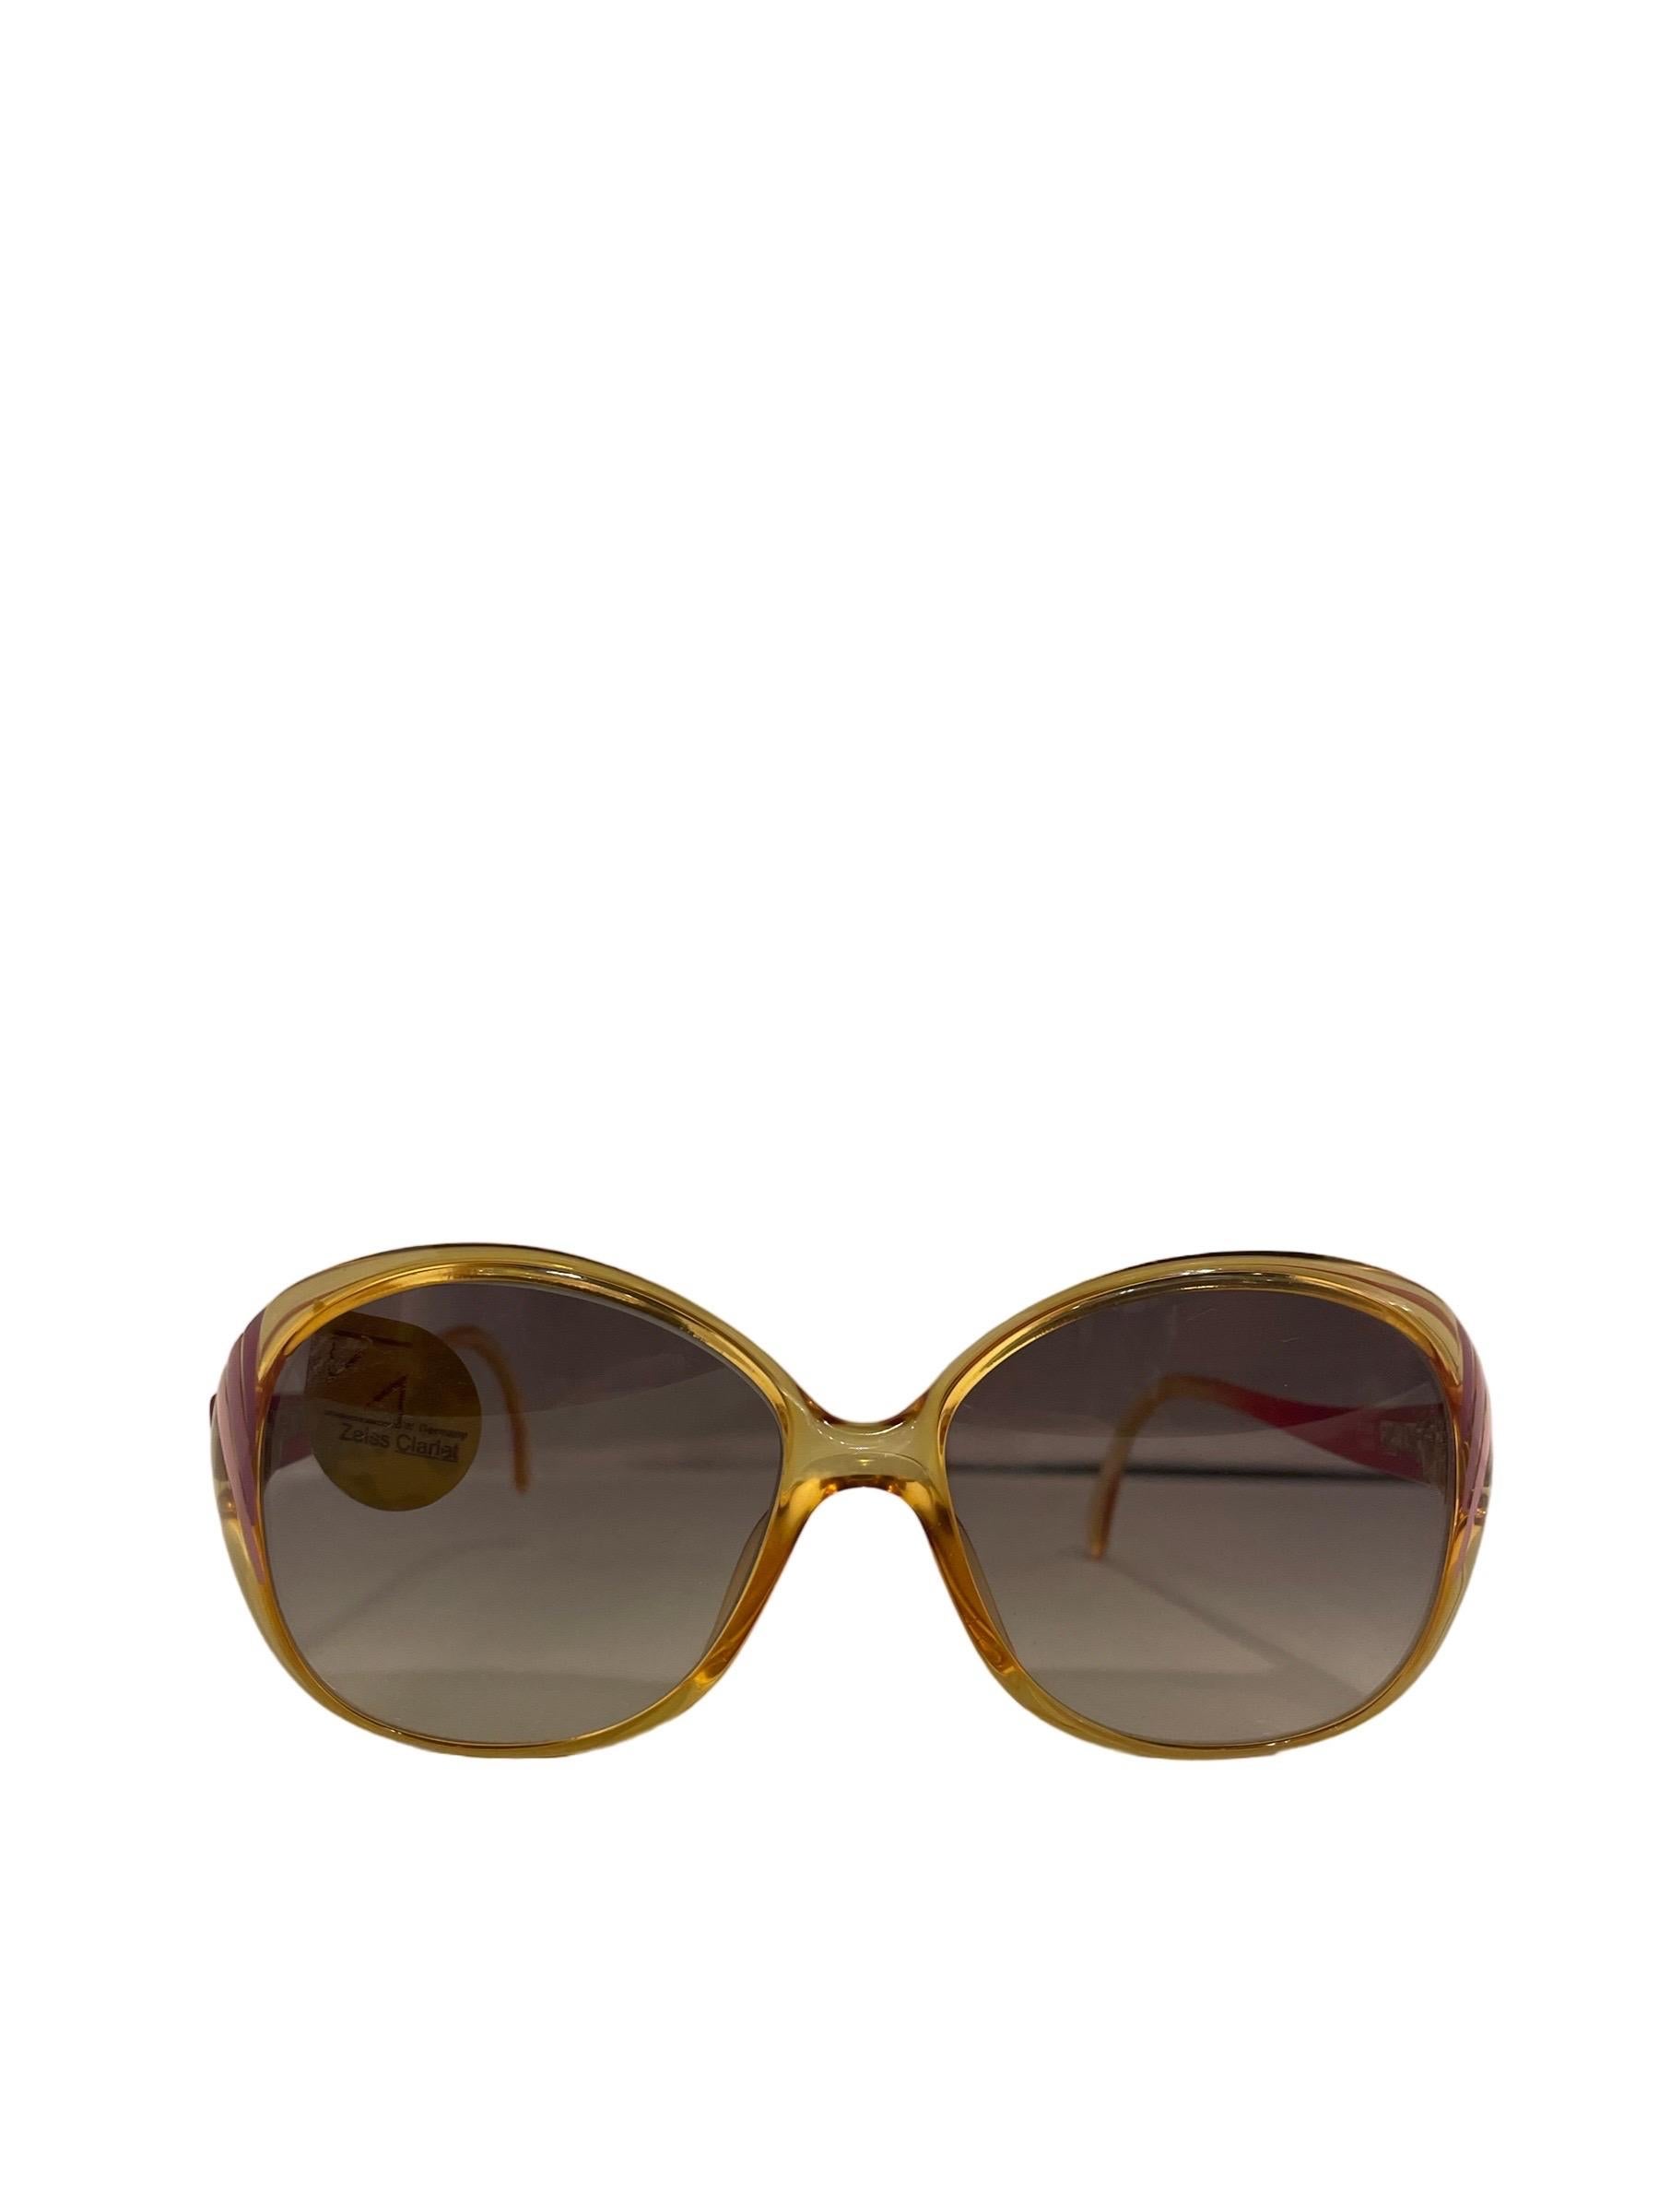 1970s Deadstock Zeiss Clarlet Oversized Sunglasses w/ Pink Gradient Stripes  1